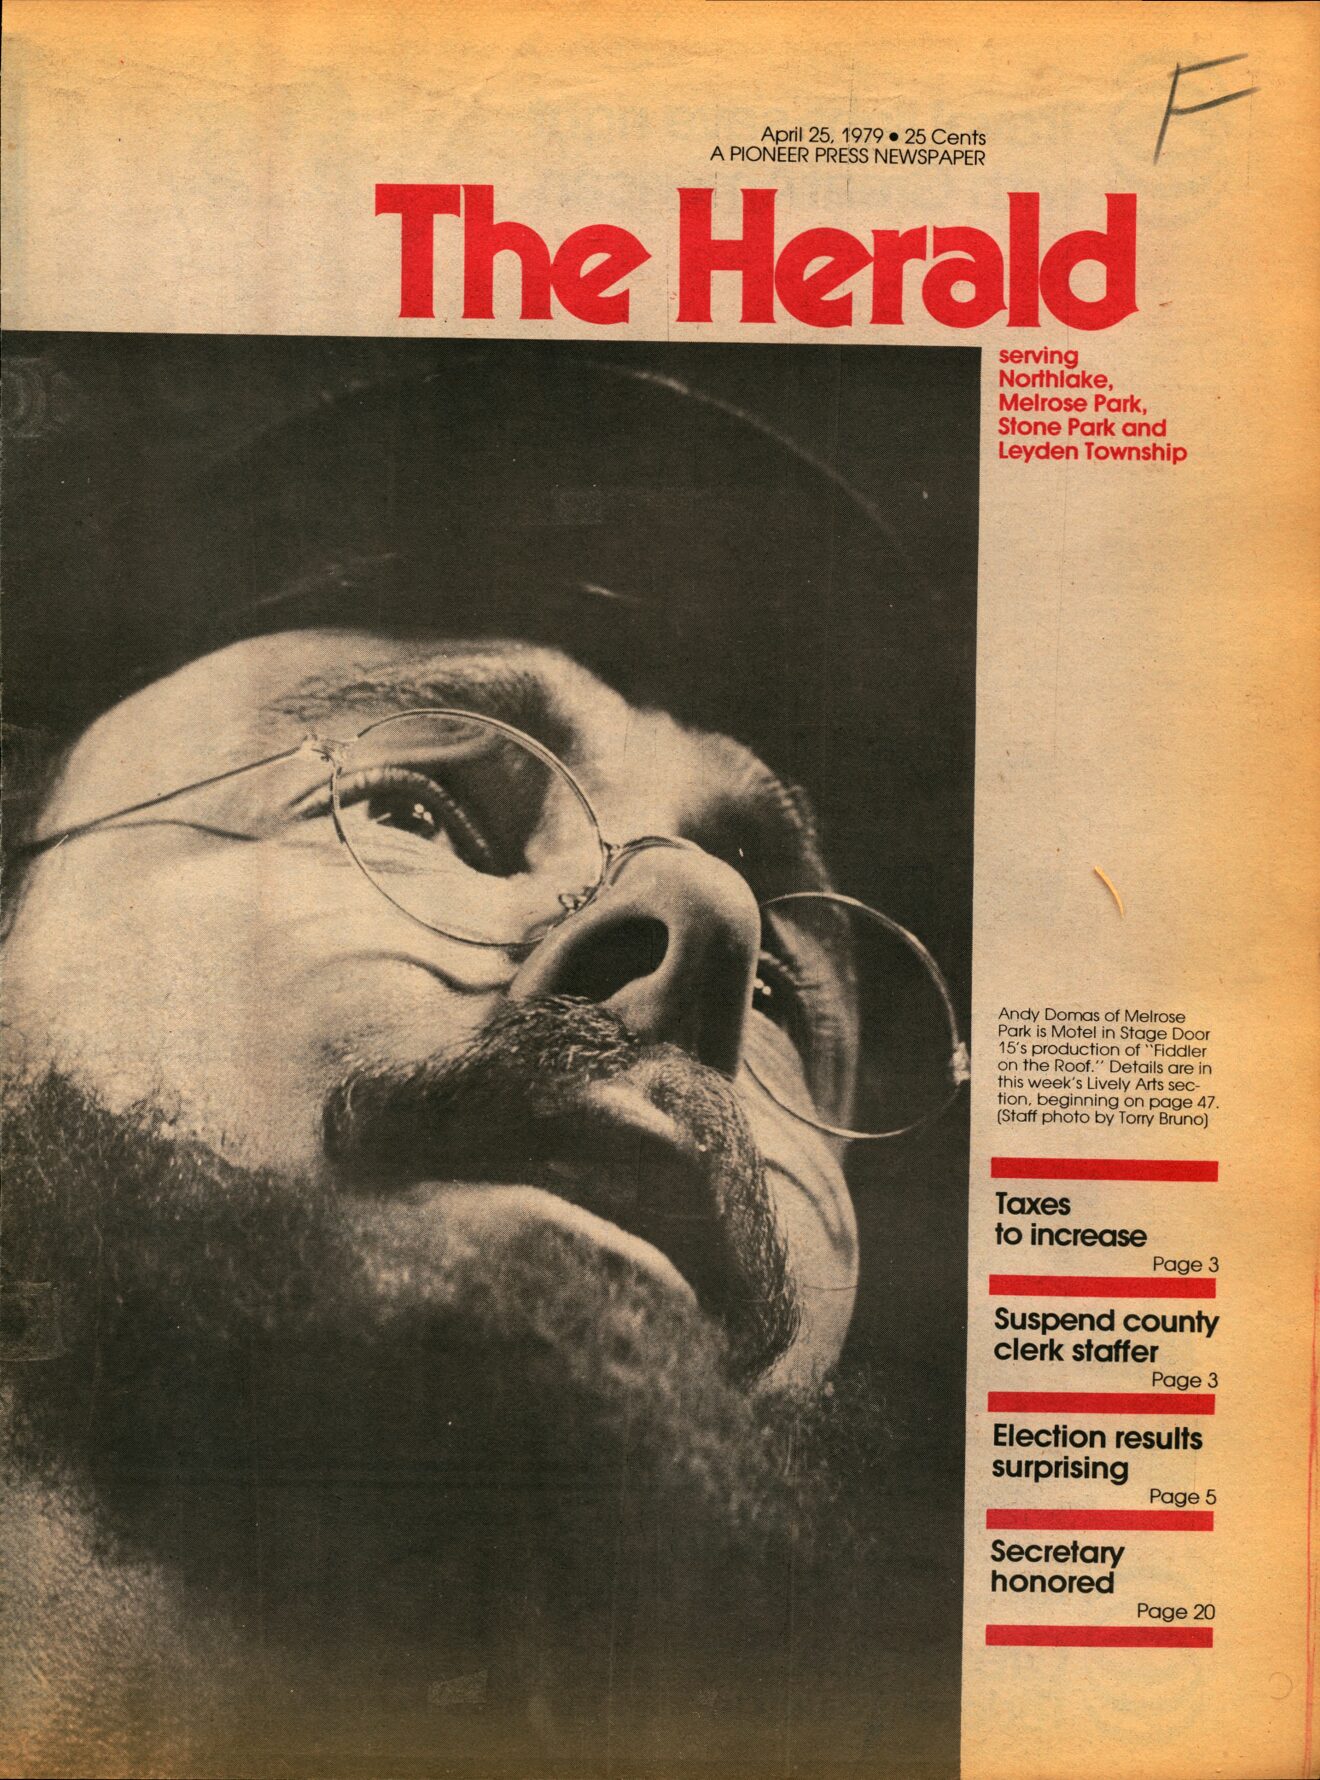 The Herald – 19790425